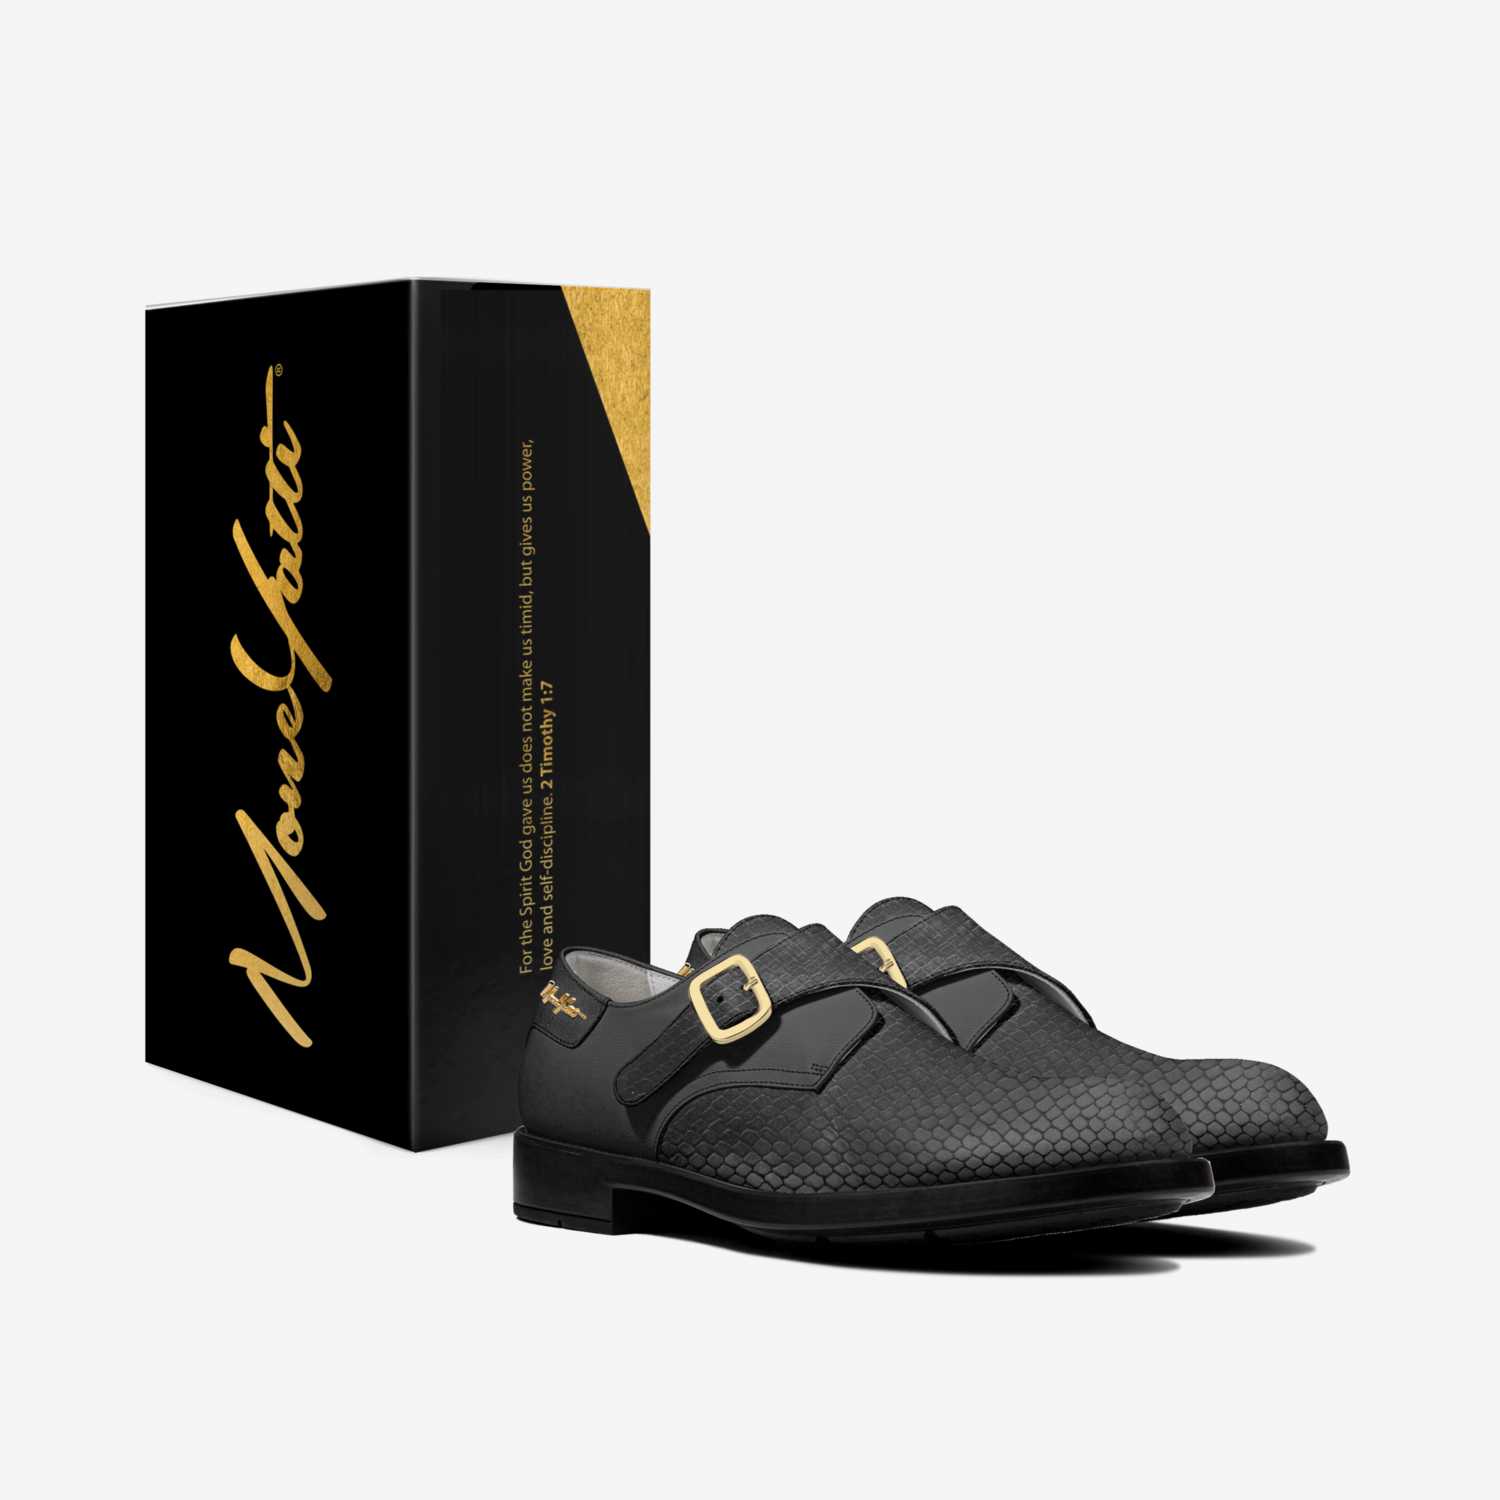 Elegantdrip 026 custom made in Italy shoes by Moneyatti Brand | Box view